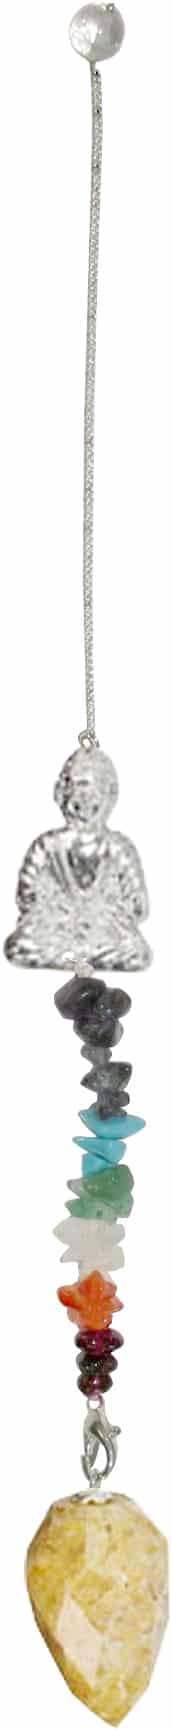 Pendel Edelsteen Chakra Boeddha